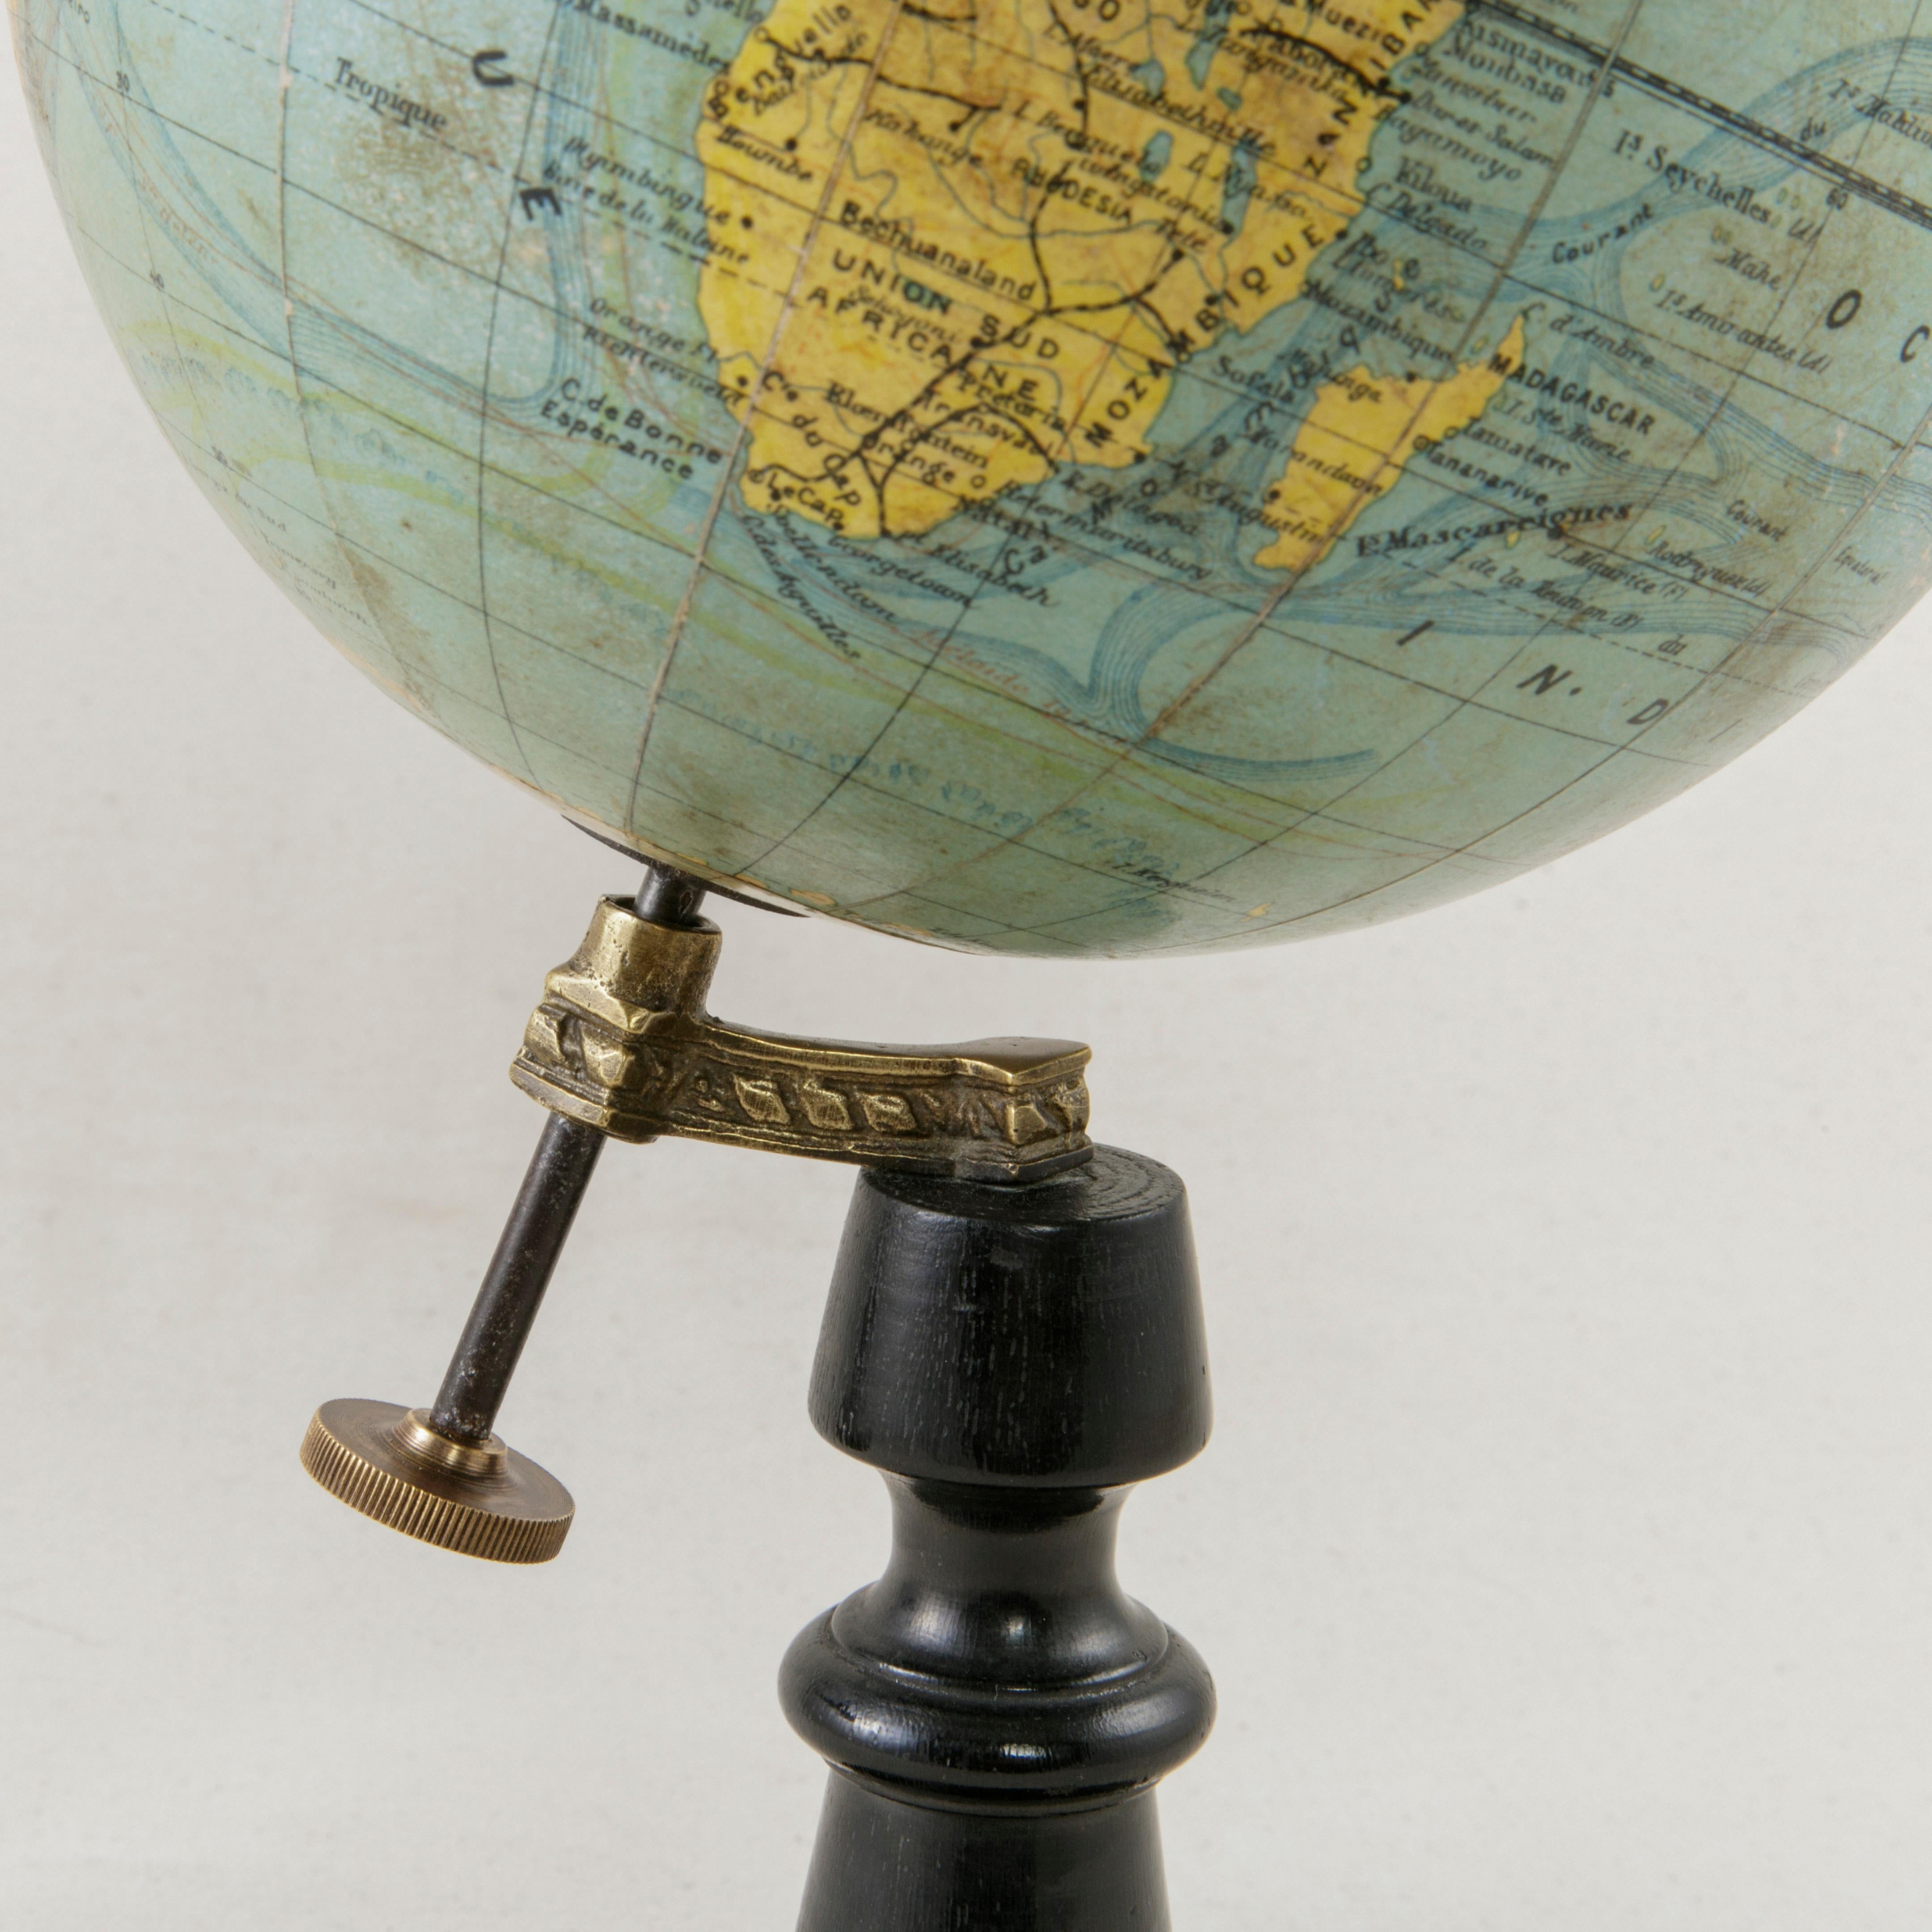 Bronze French Terrestrial Globe on Ebonized Wooden Base by Cartographer J. Forest